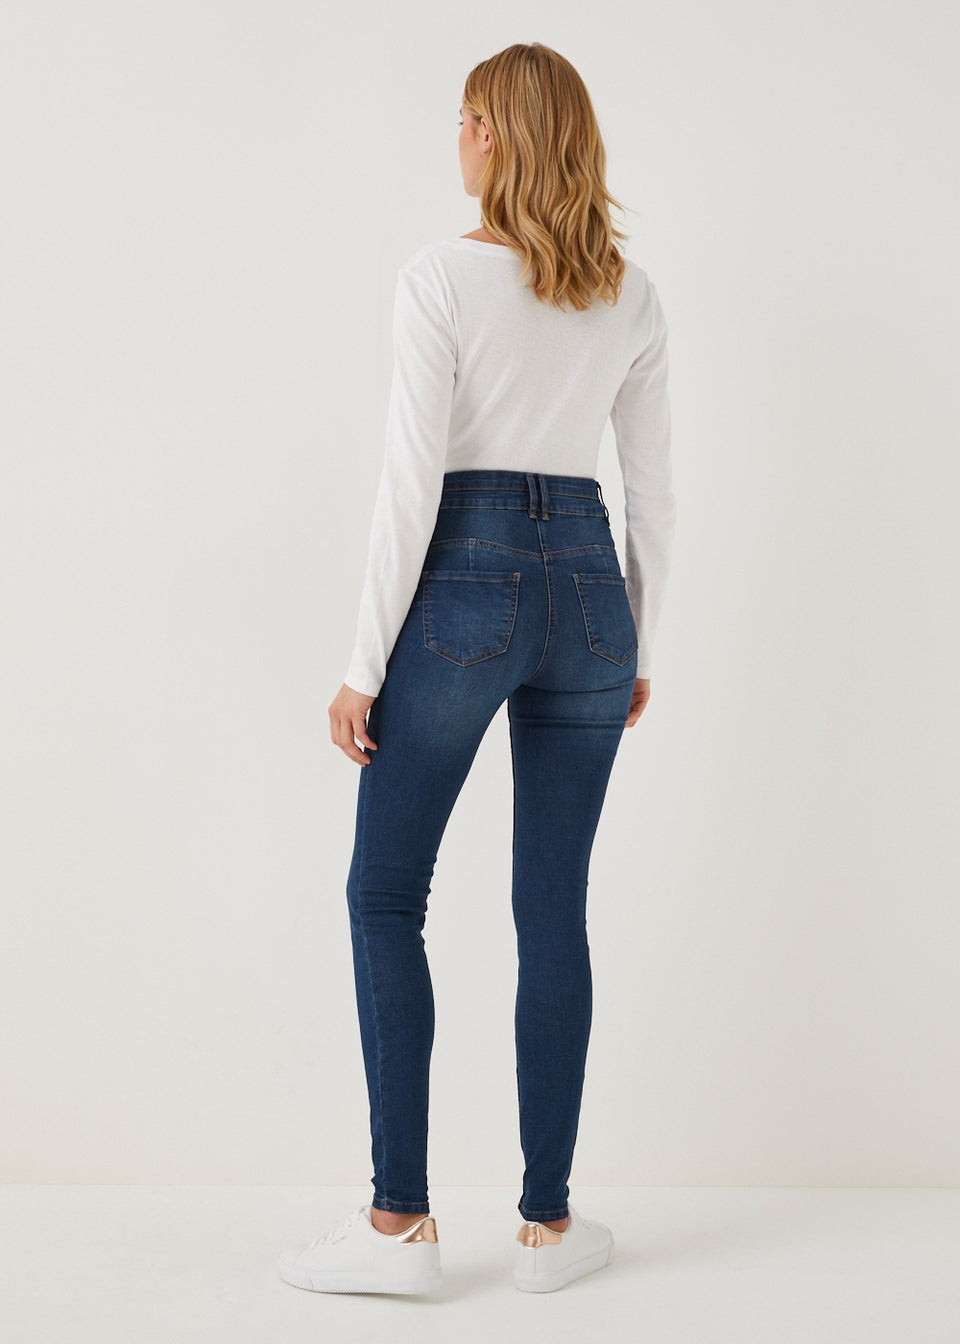 April Dark Wash Push Up Super Skinny Jeans (Long Length)